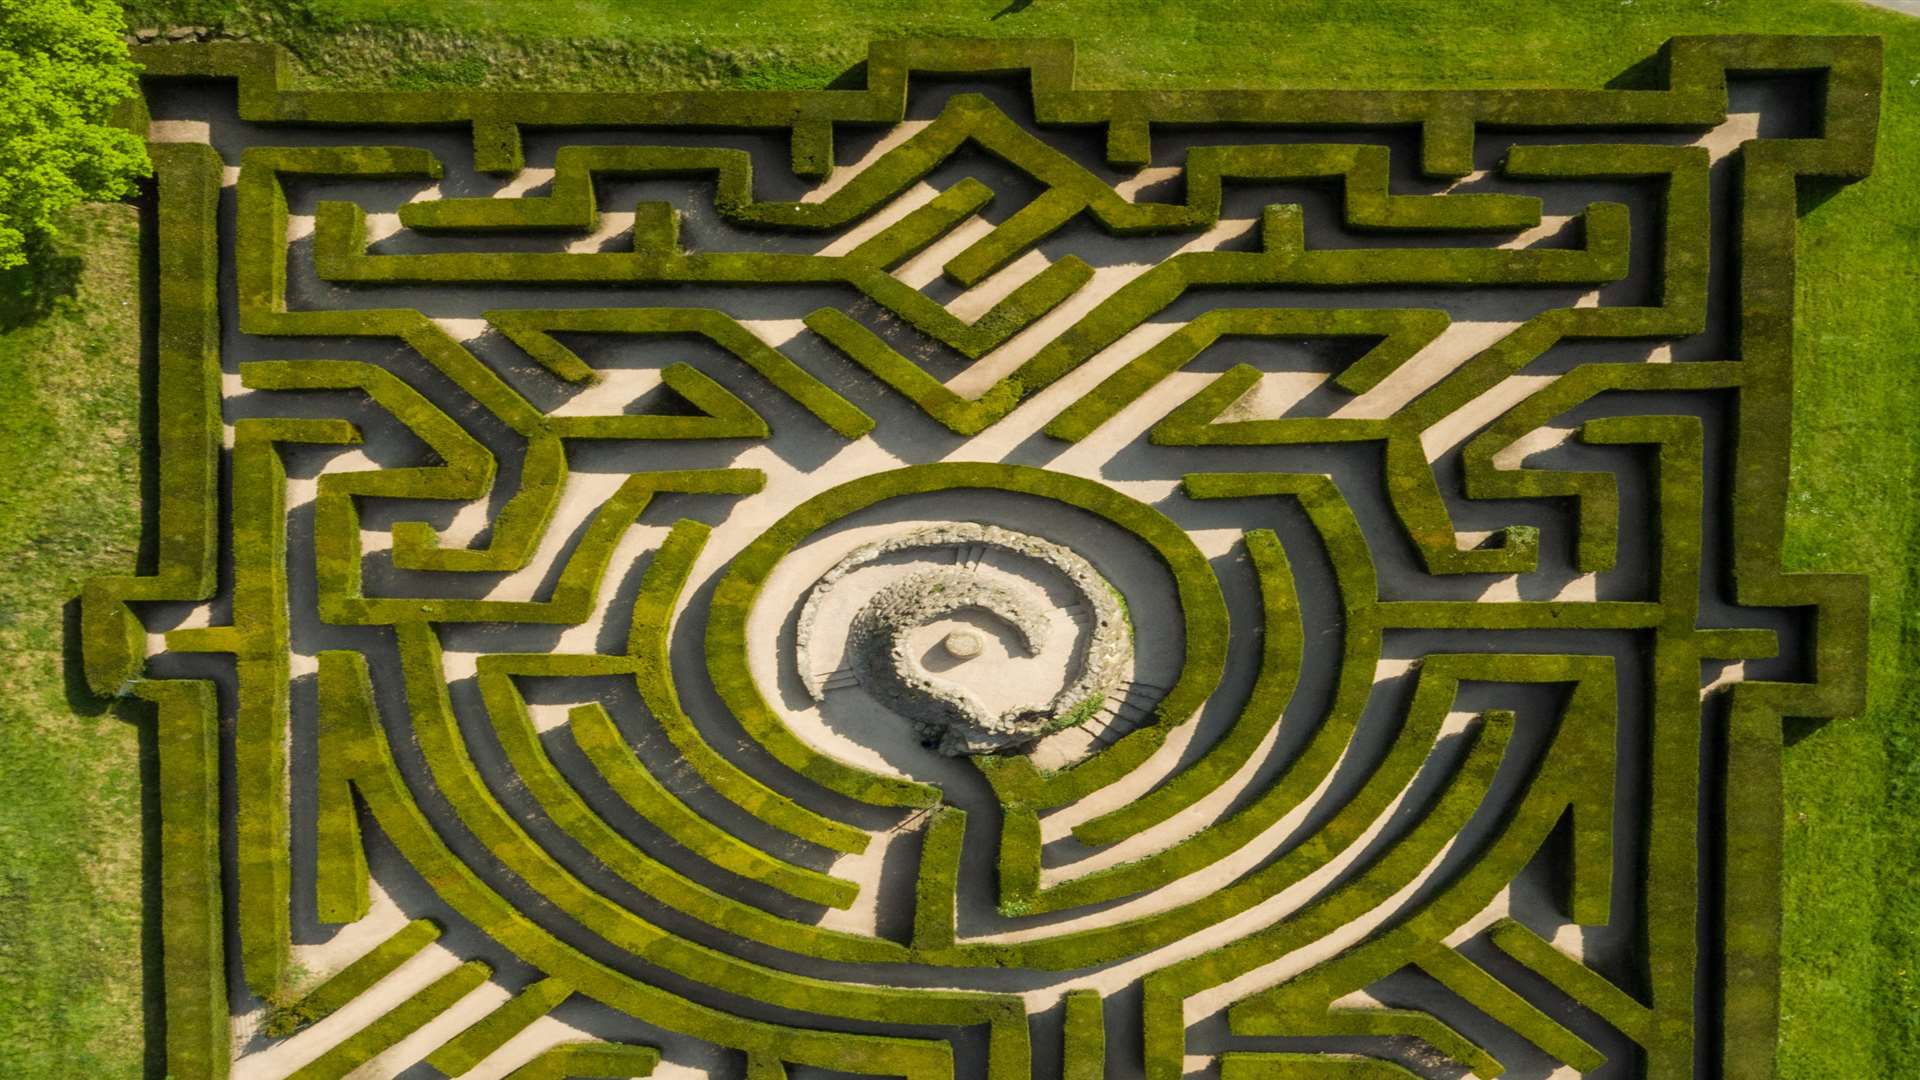 The Leeds Castle maze